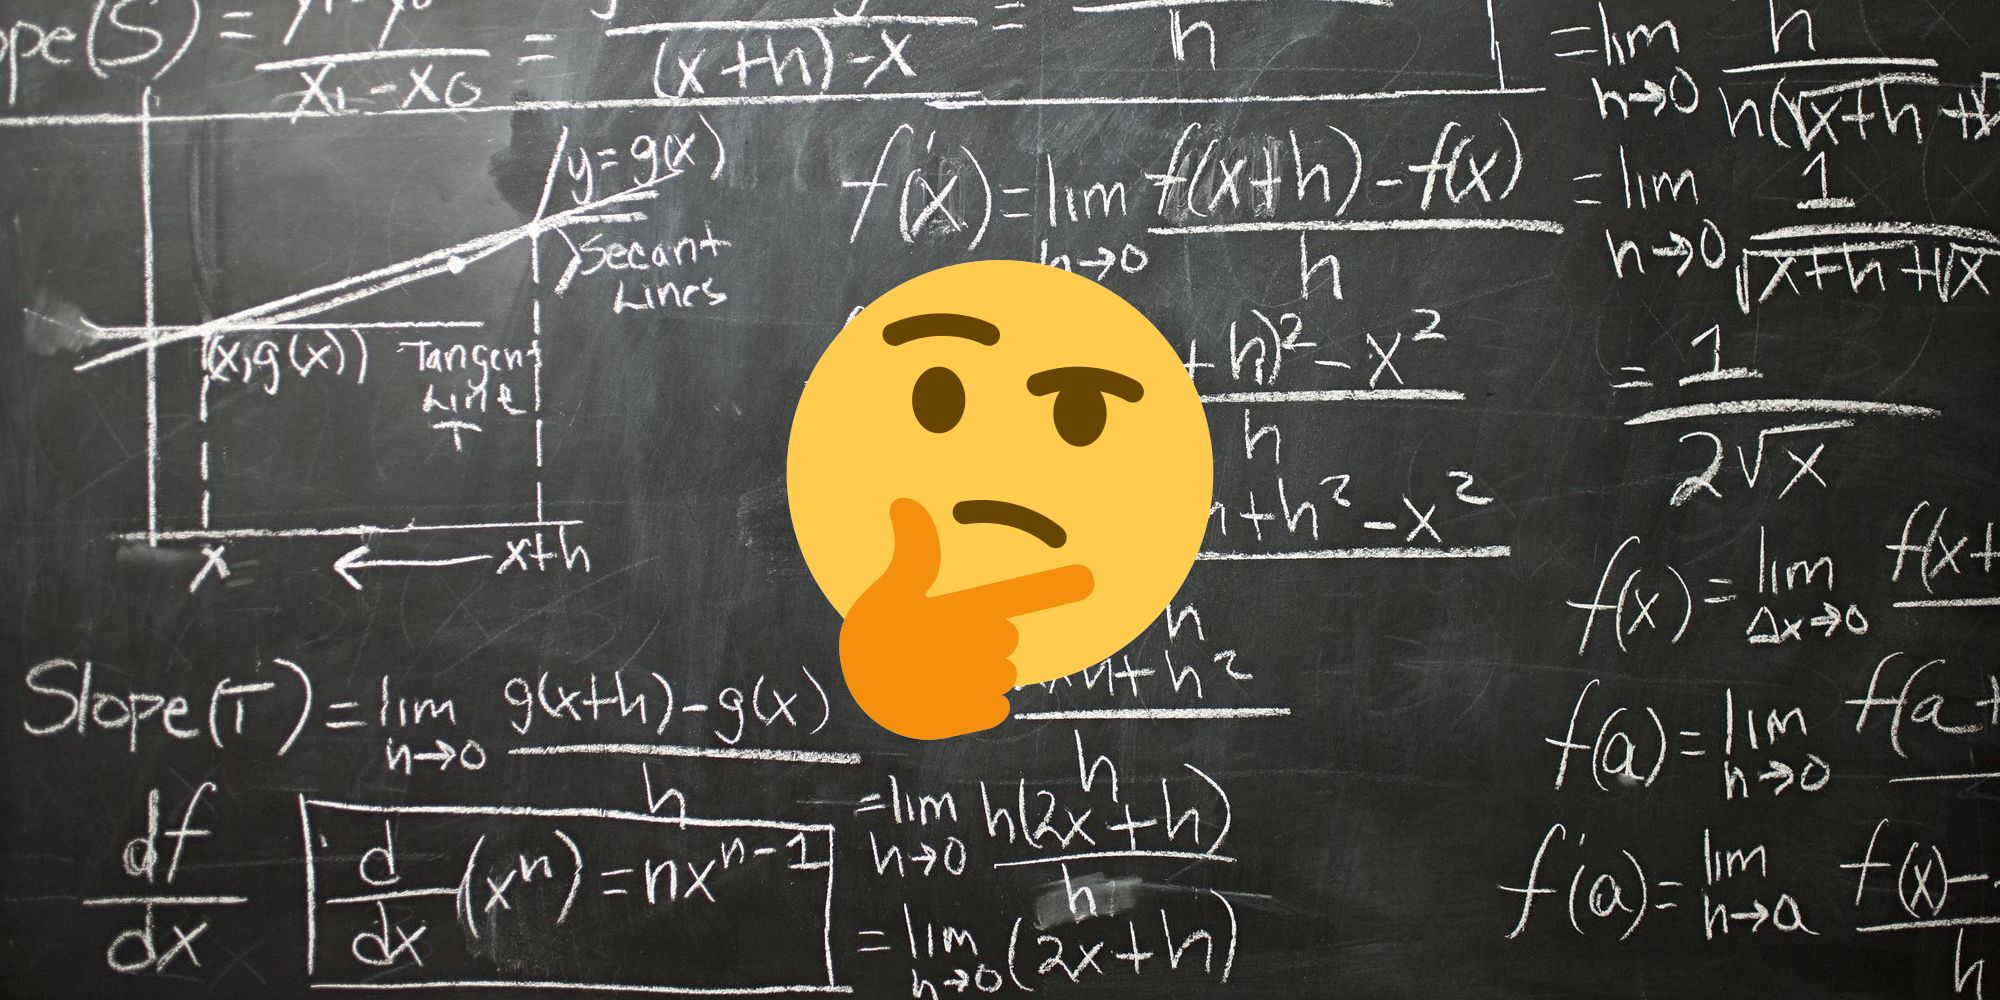 algebra mathematics problems